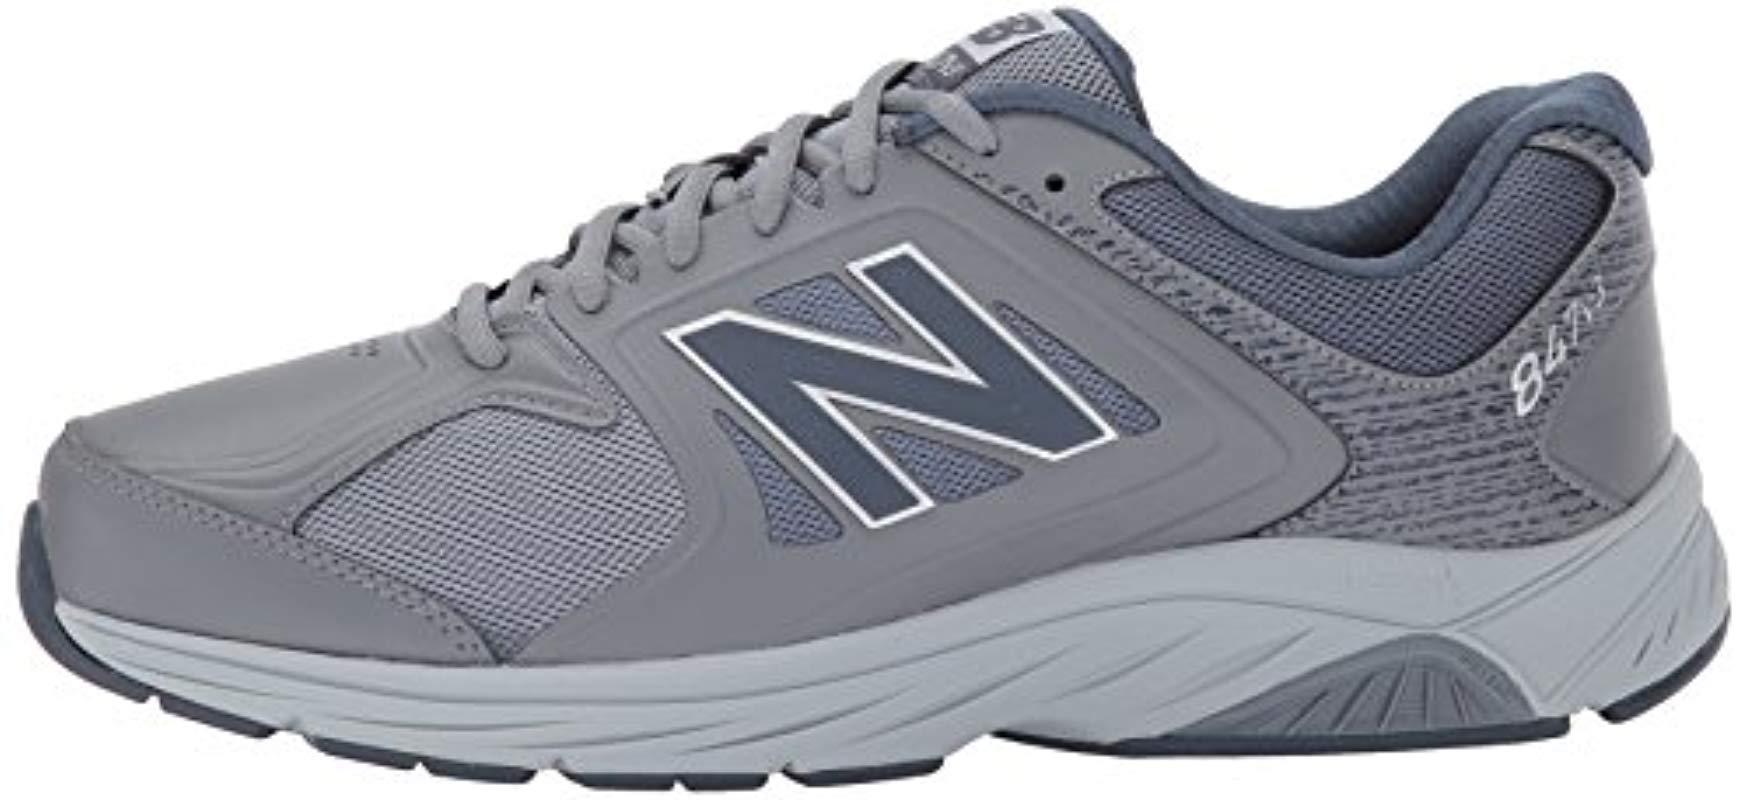 New Balance 847v3 Walking Shoe, Grey, 8 4e Us in Gray for Men - Lyst